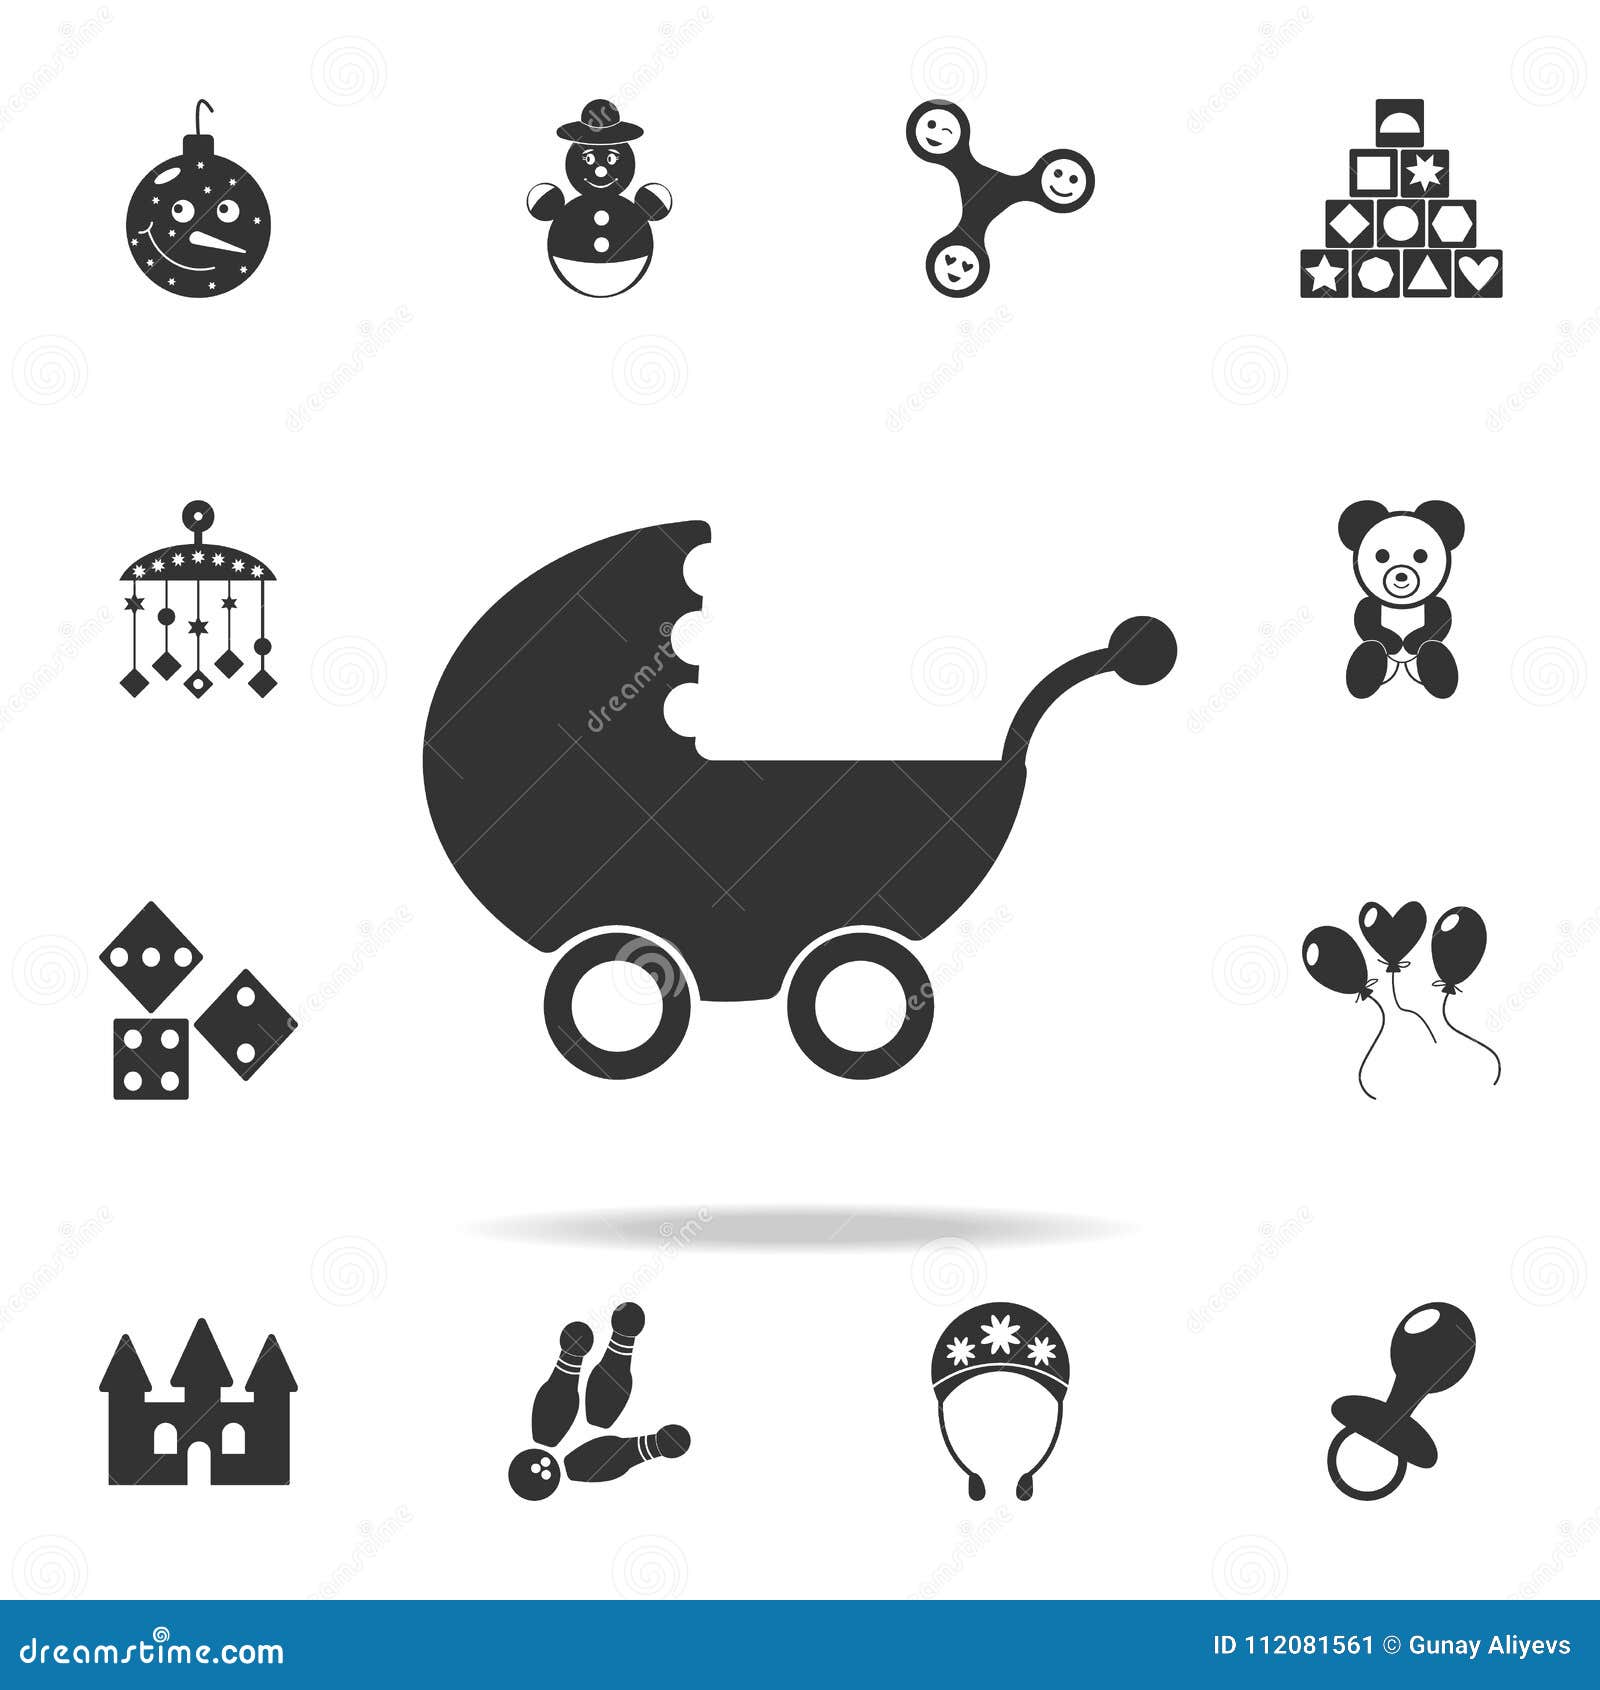 baby stroller websites